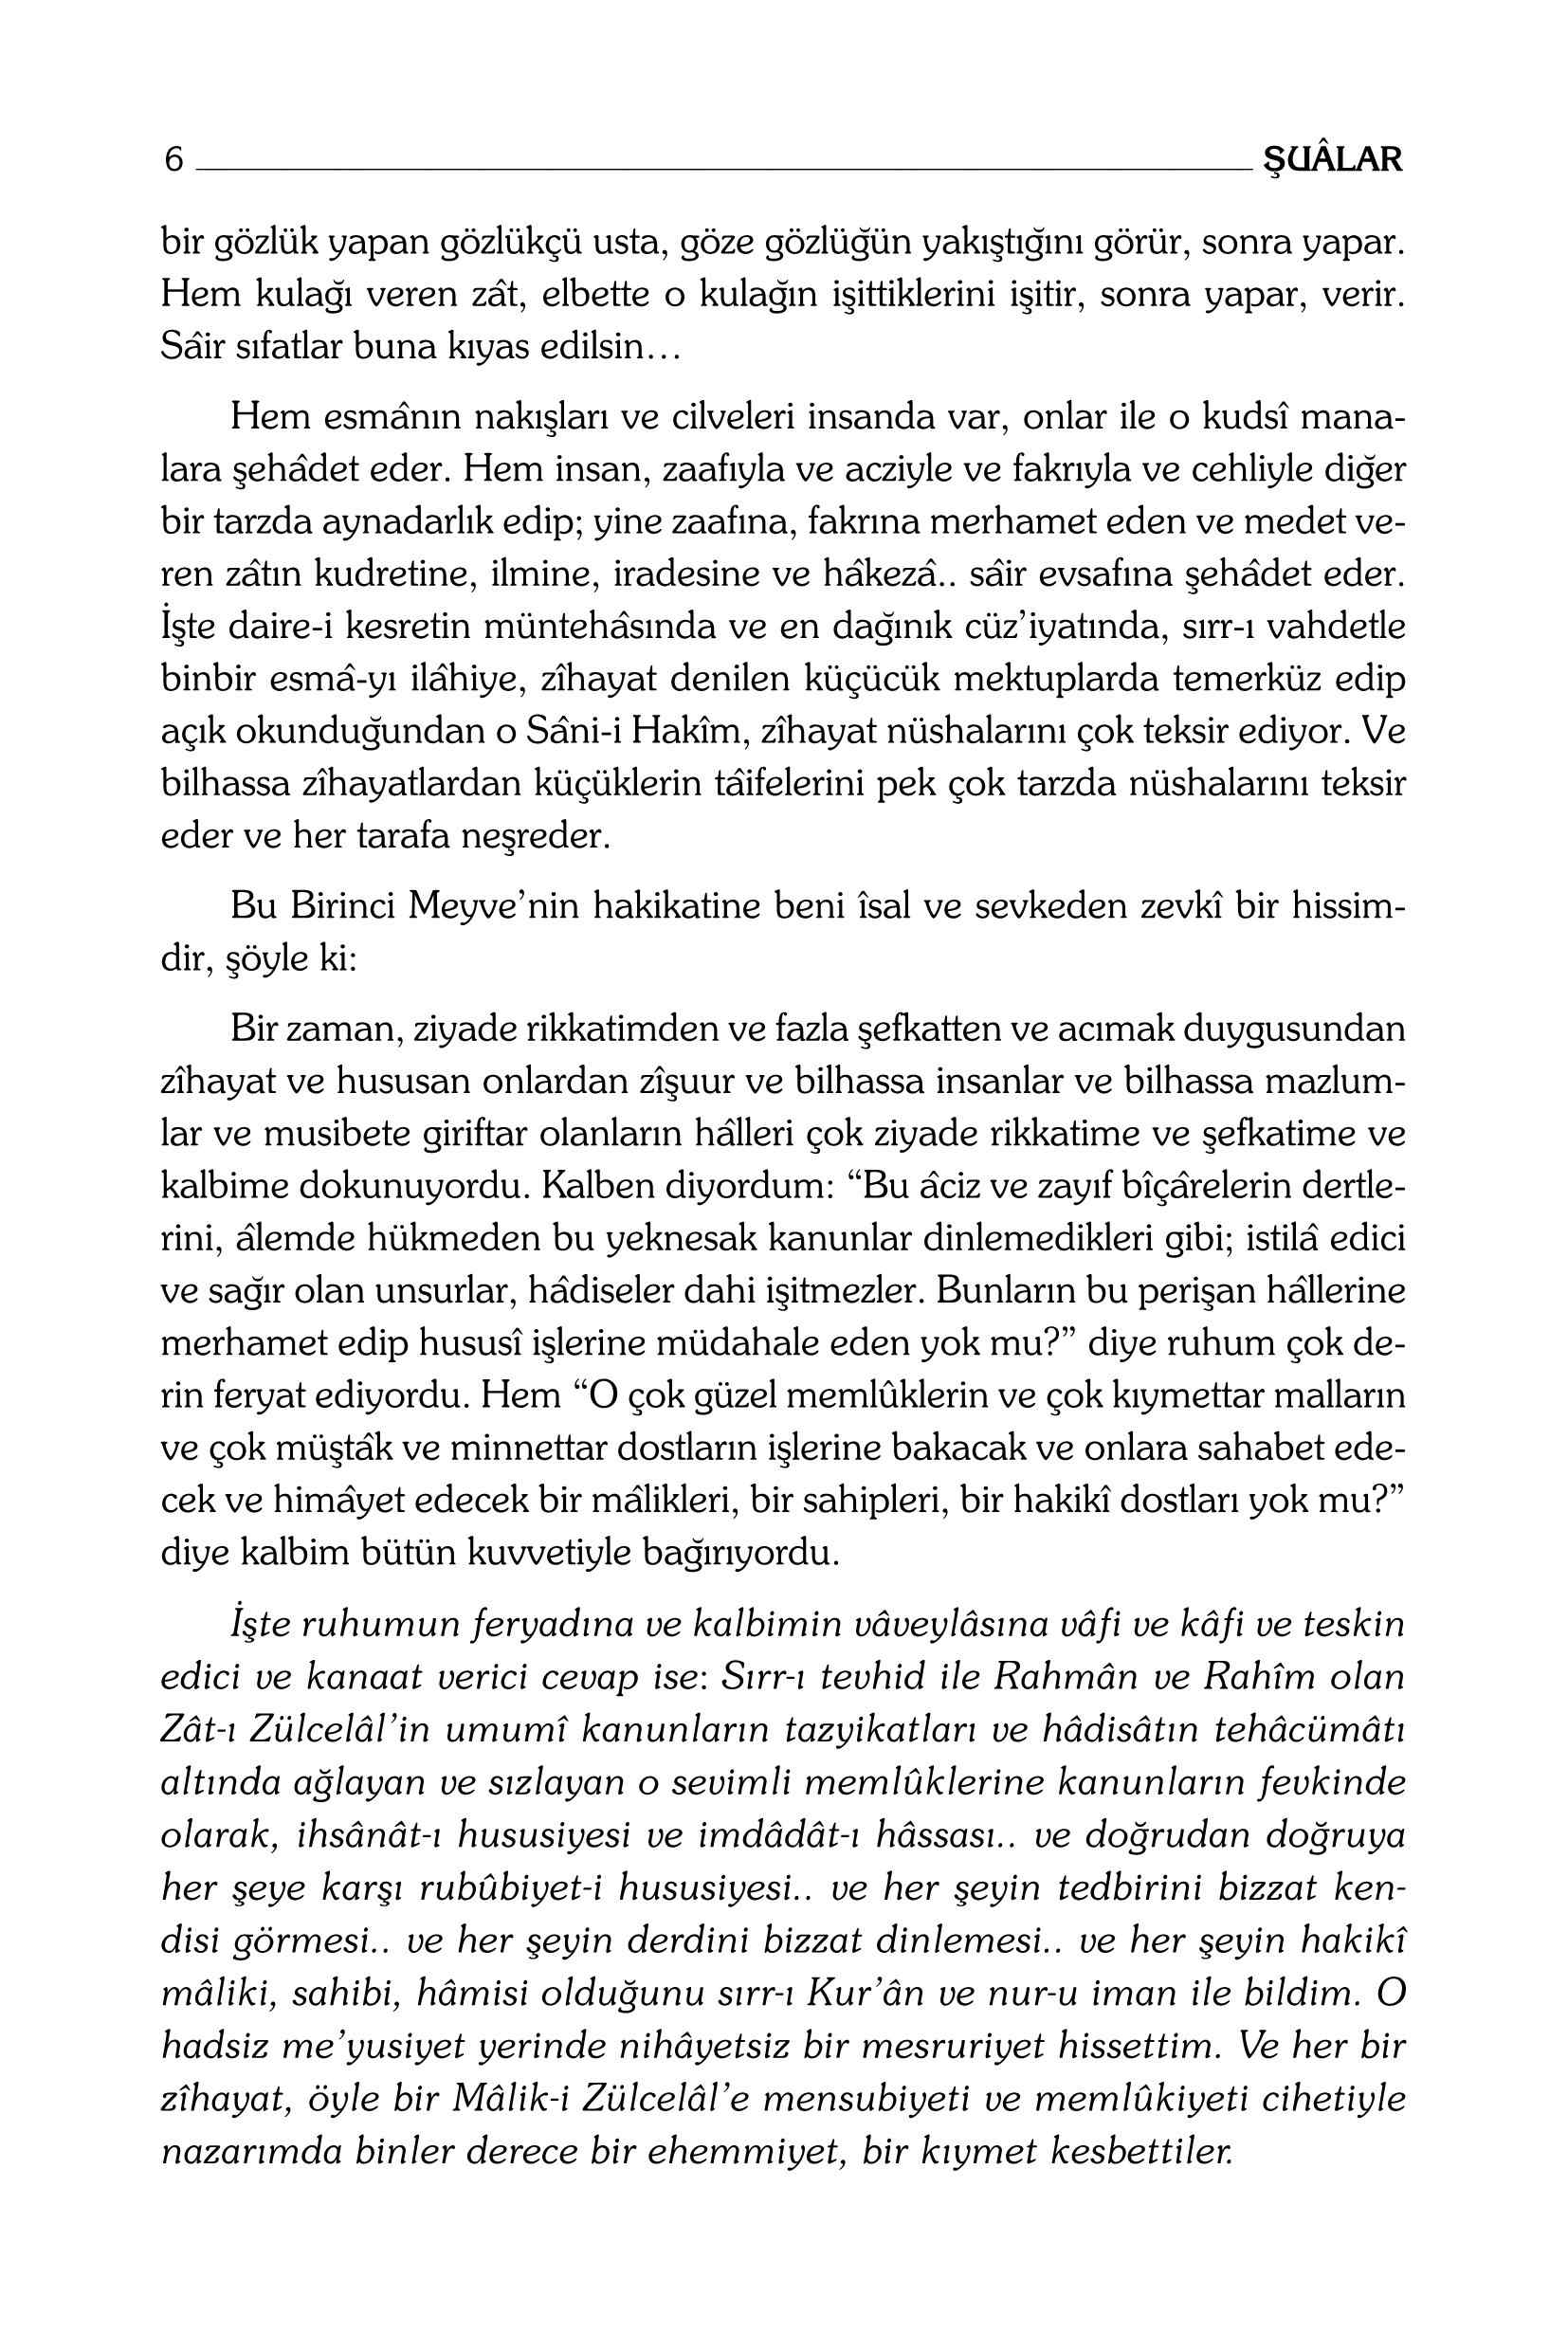 B Said Nursi - Sualar - SahdamarY.pdf, 759-Sayfa 